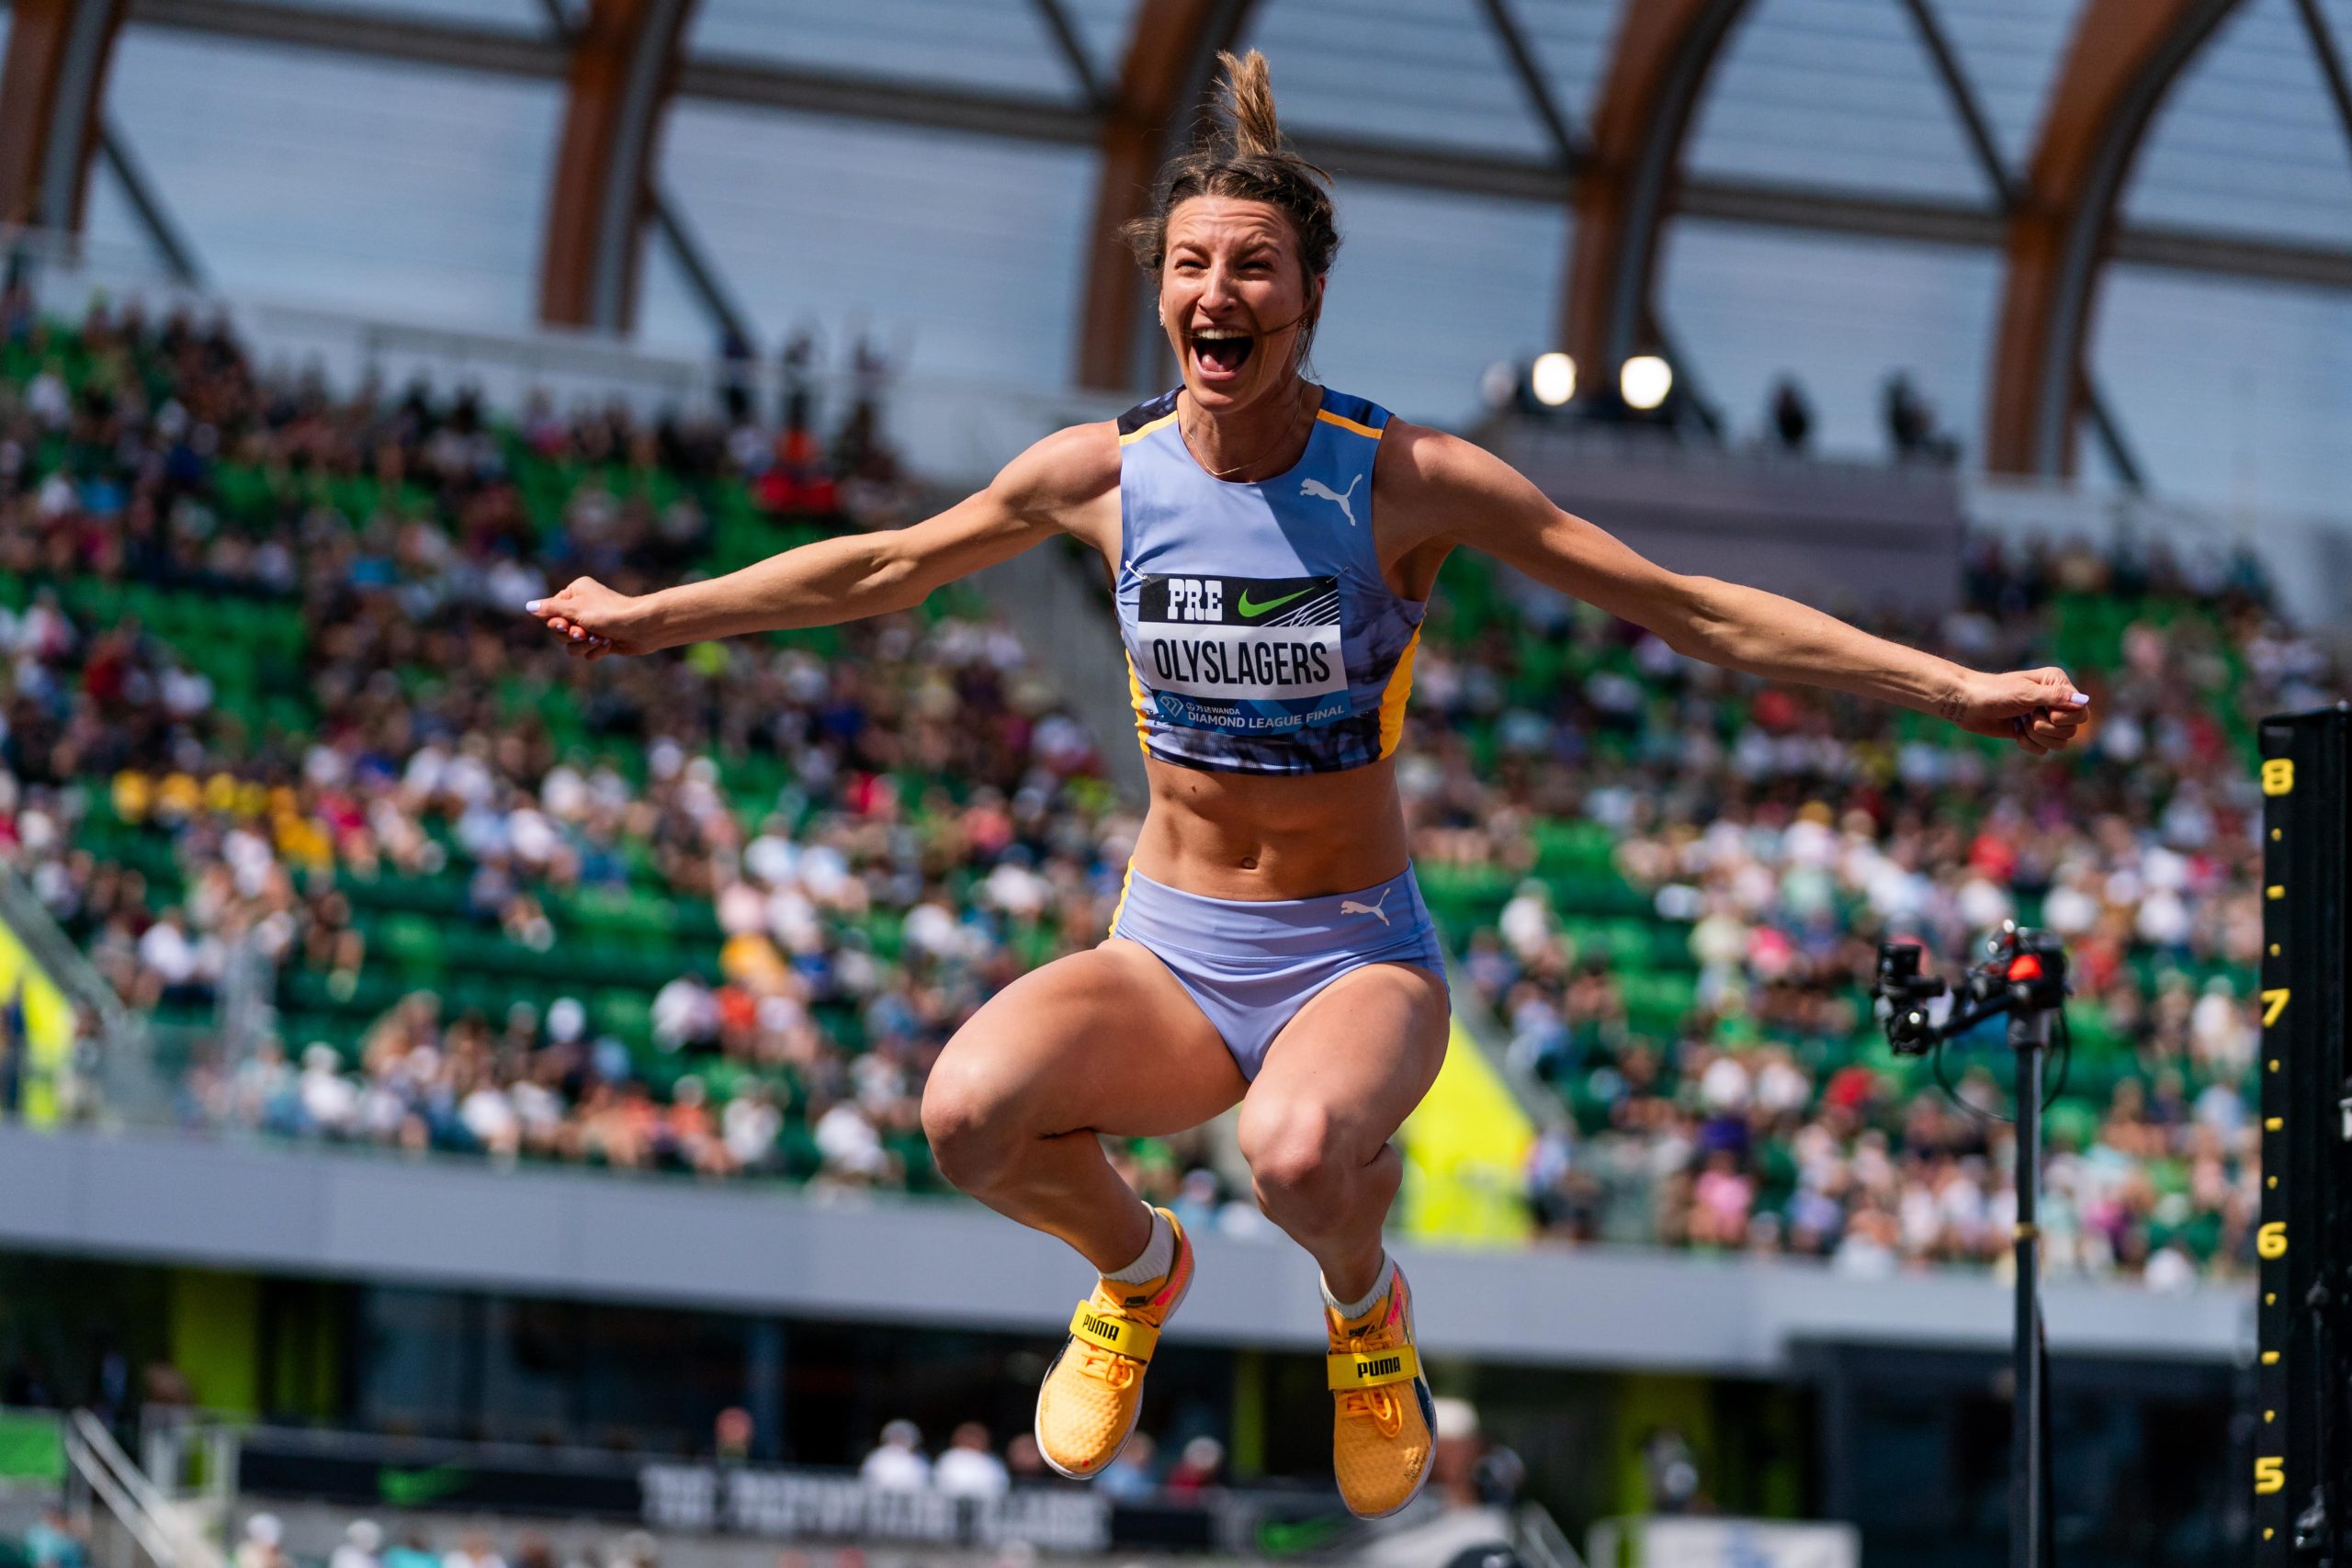 Olyslagers breaks Australian record in High Jump